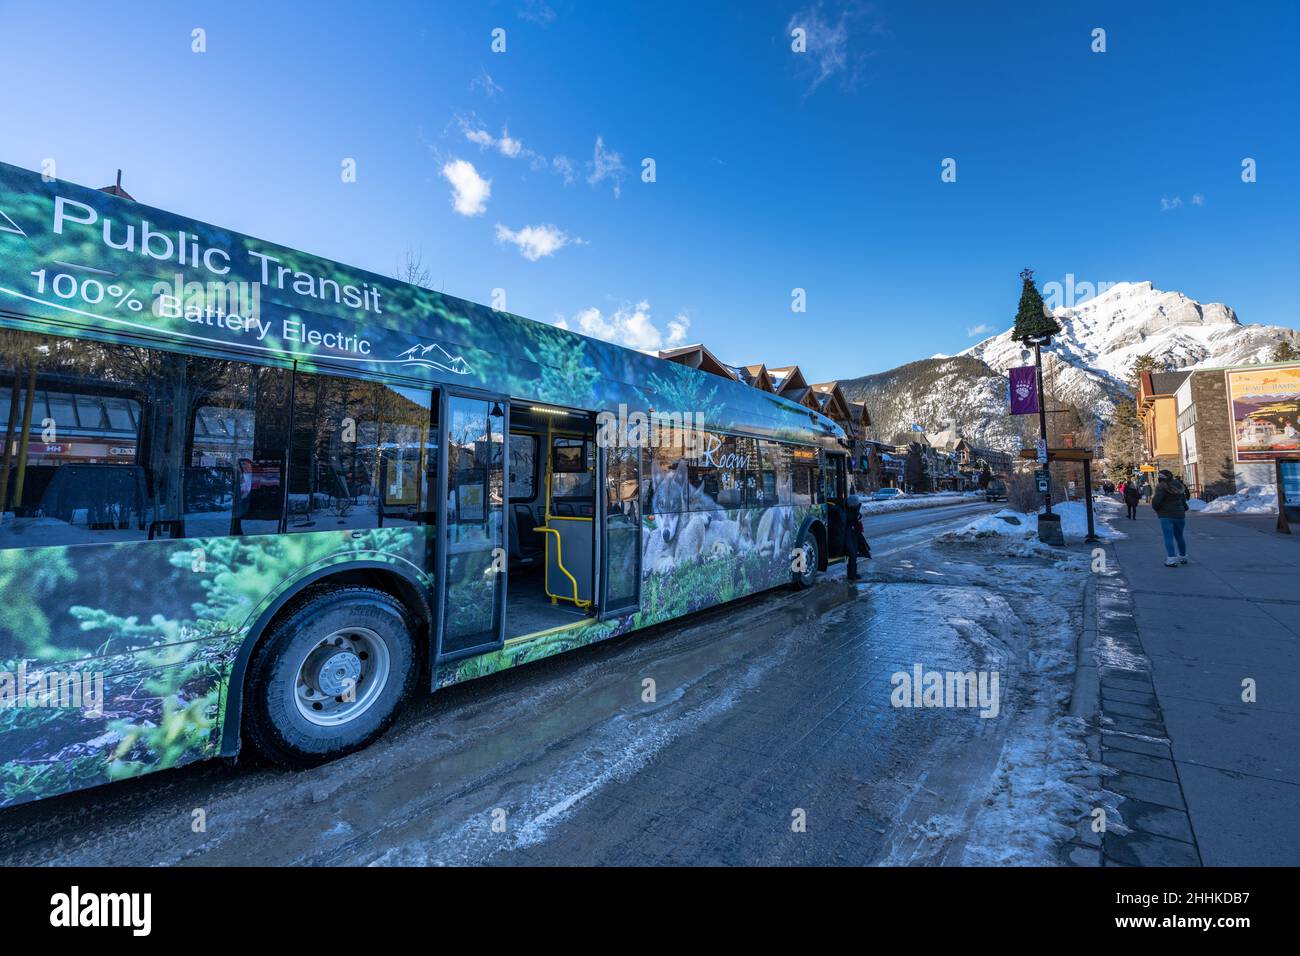 Street view of Town of Banff. Bus stop on Banff Avenue in winter snowy season. Banff, Alberta, Canada. Stock Photo